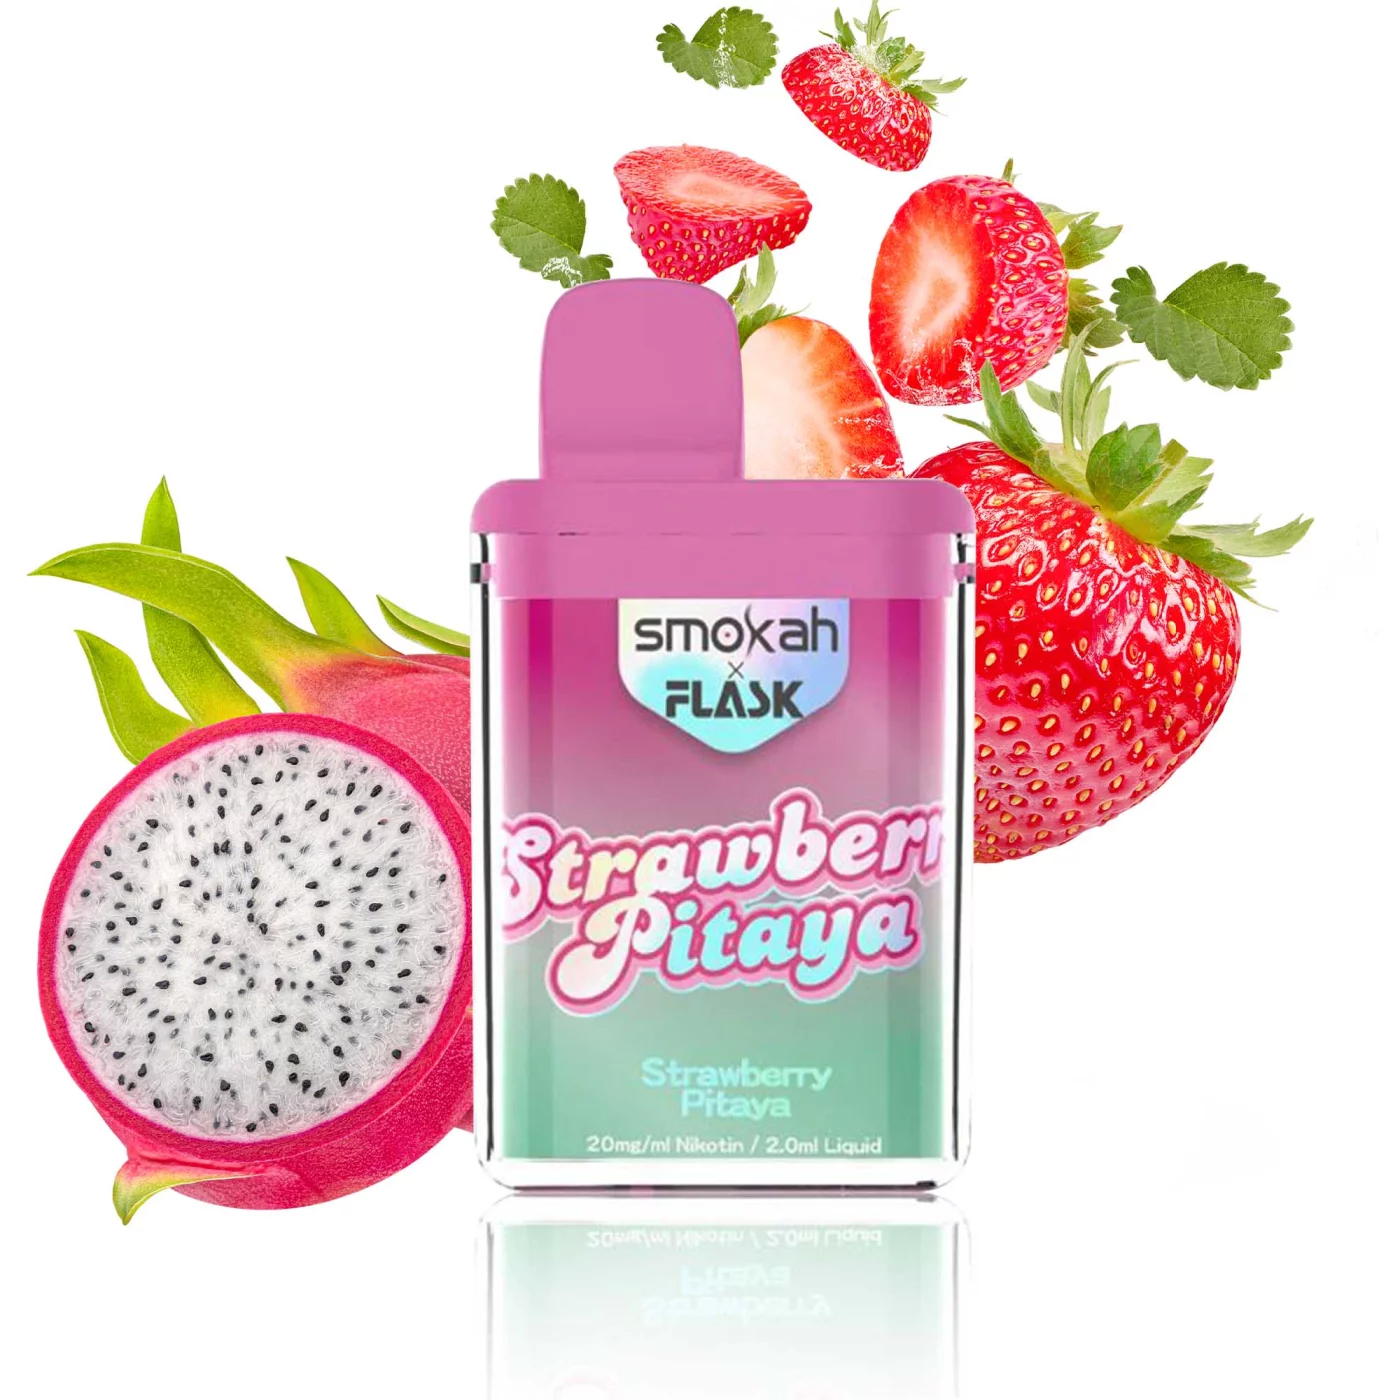 Smokah x Flask Pocket - Einweg E-Shisha - Strawberry Pitaya 2% Nikotin